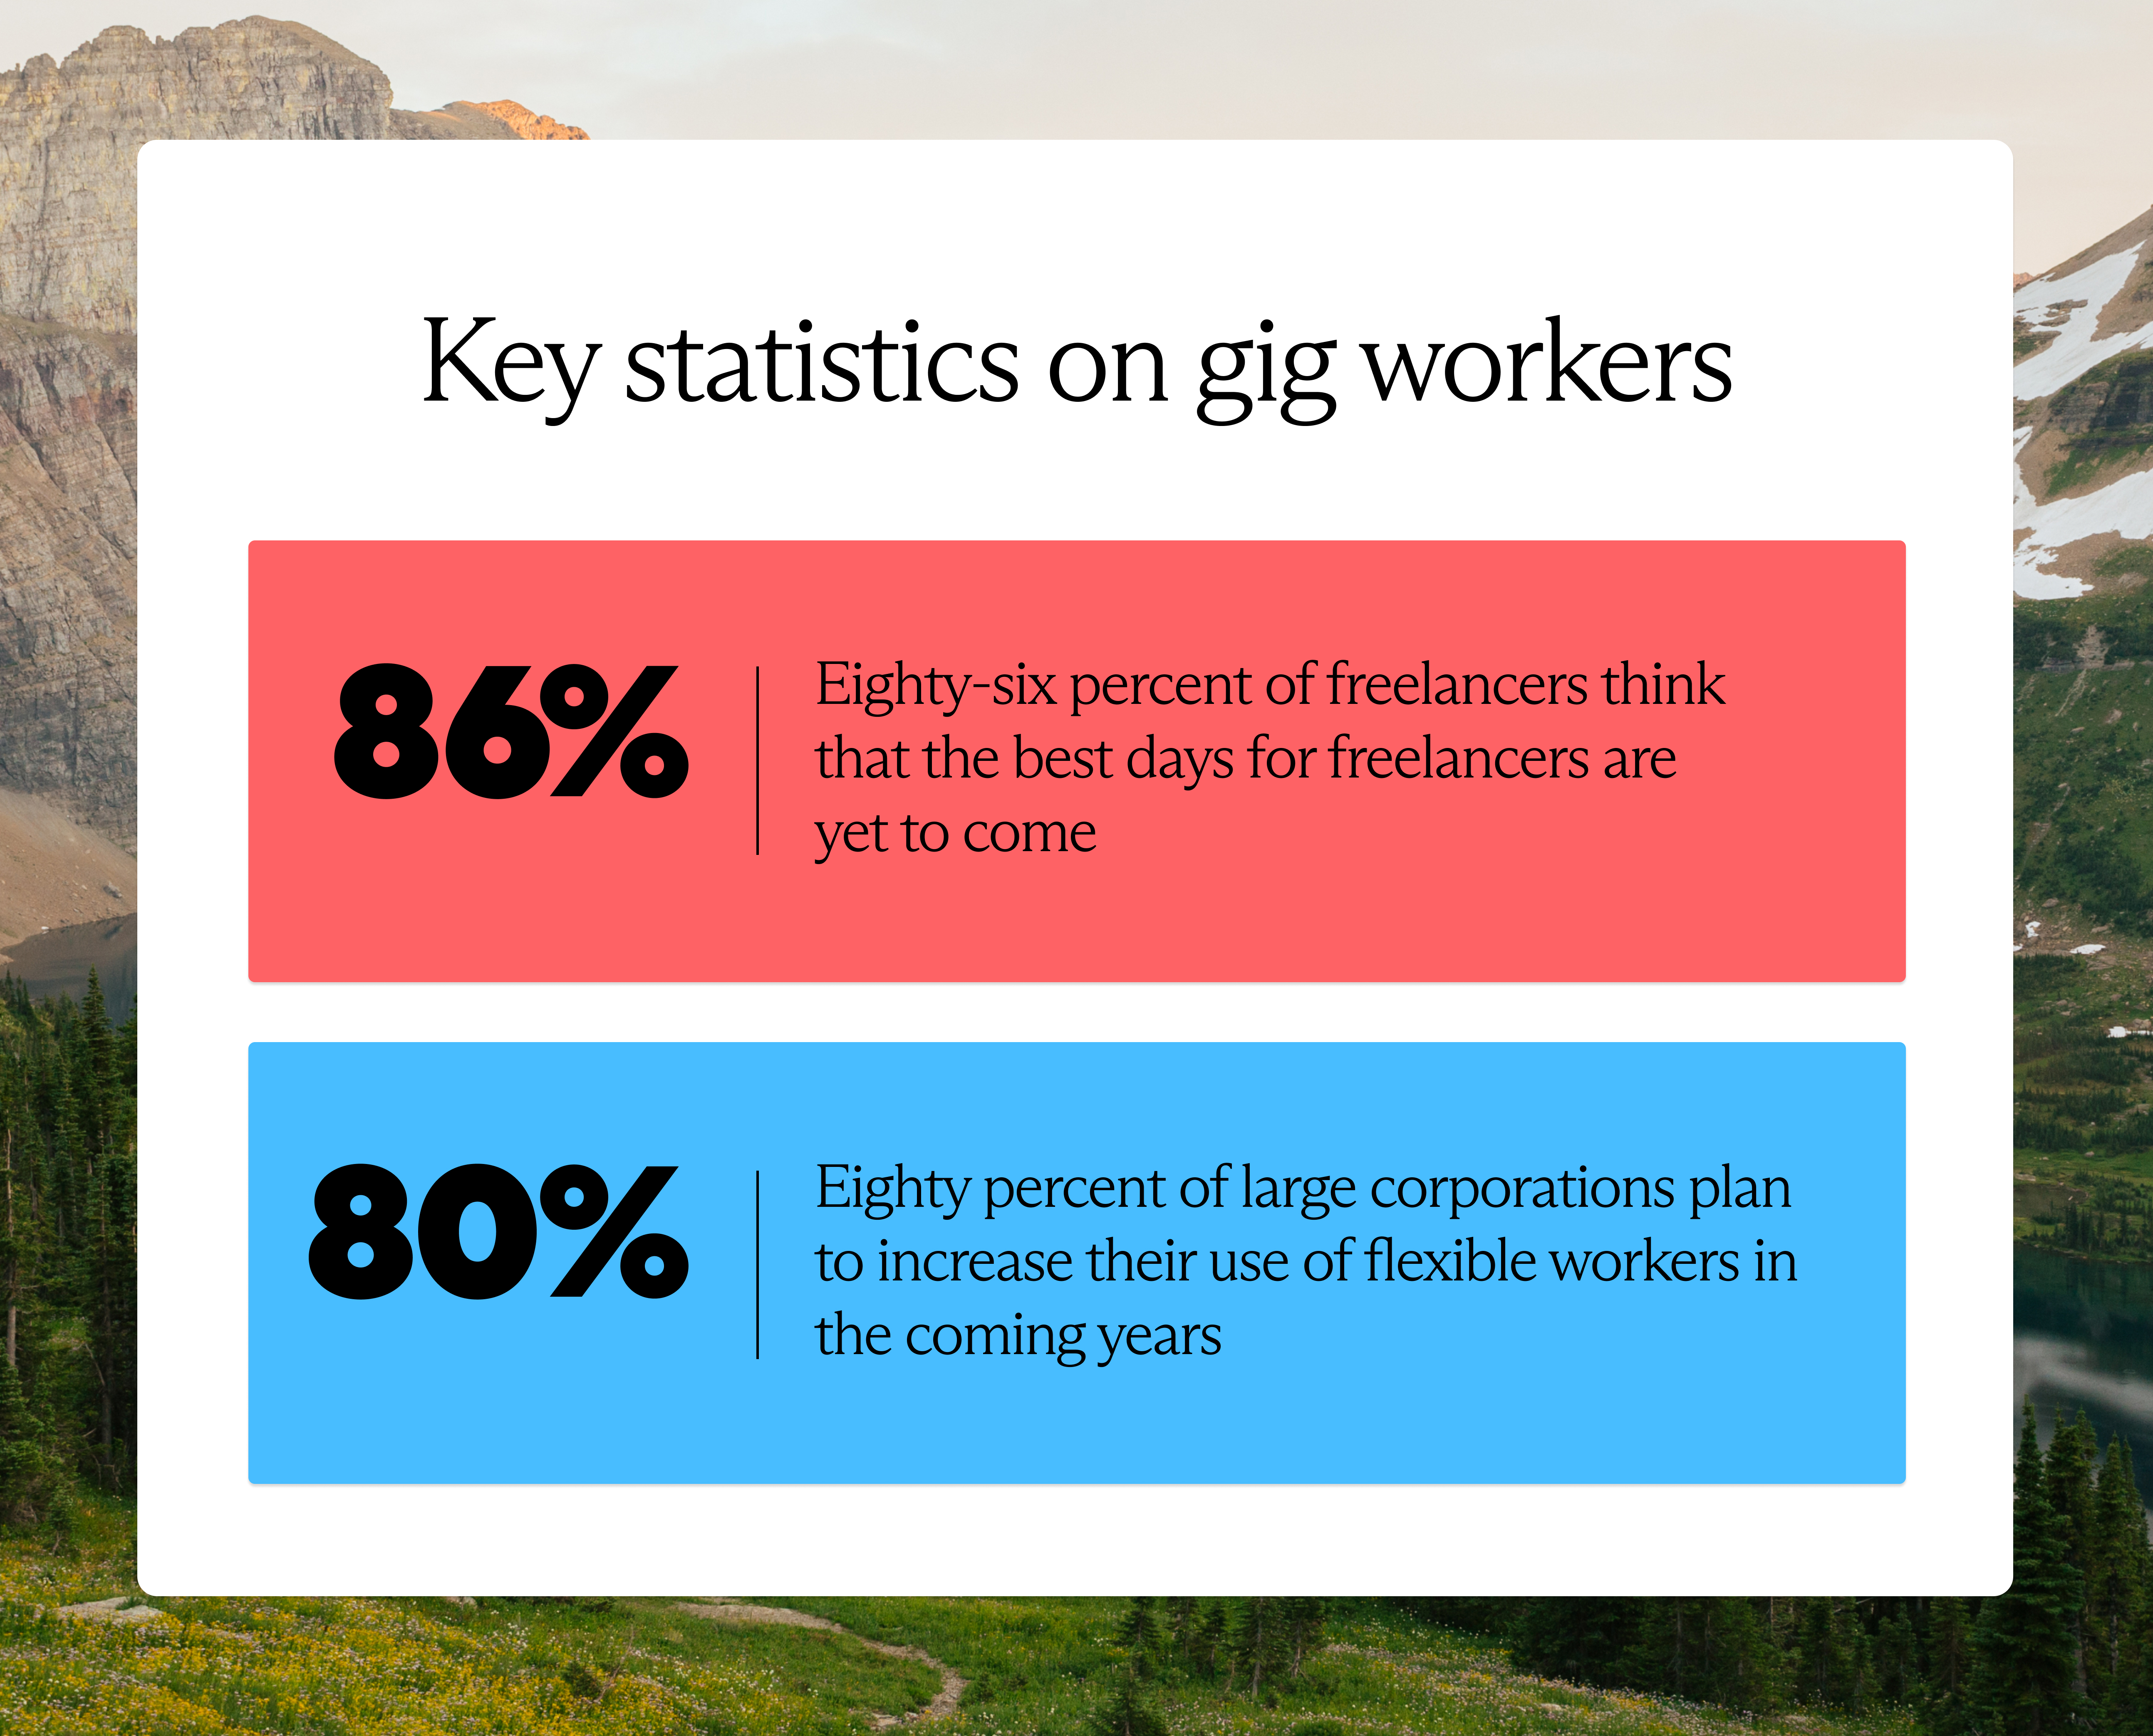 Key statistics on the future of the gig economy